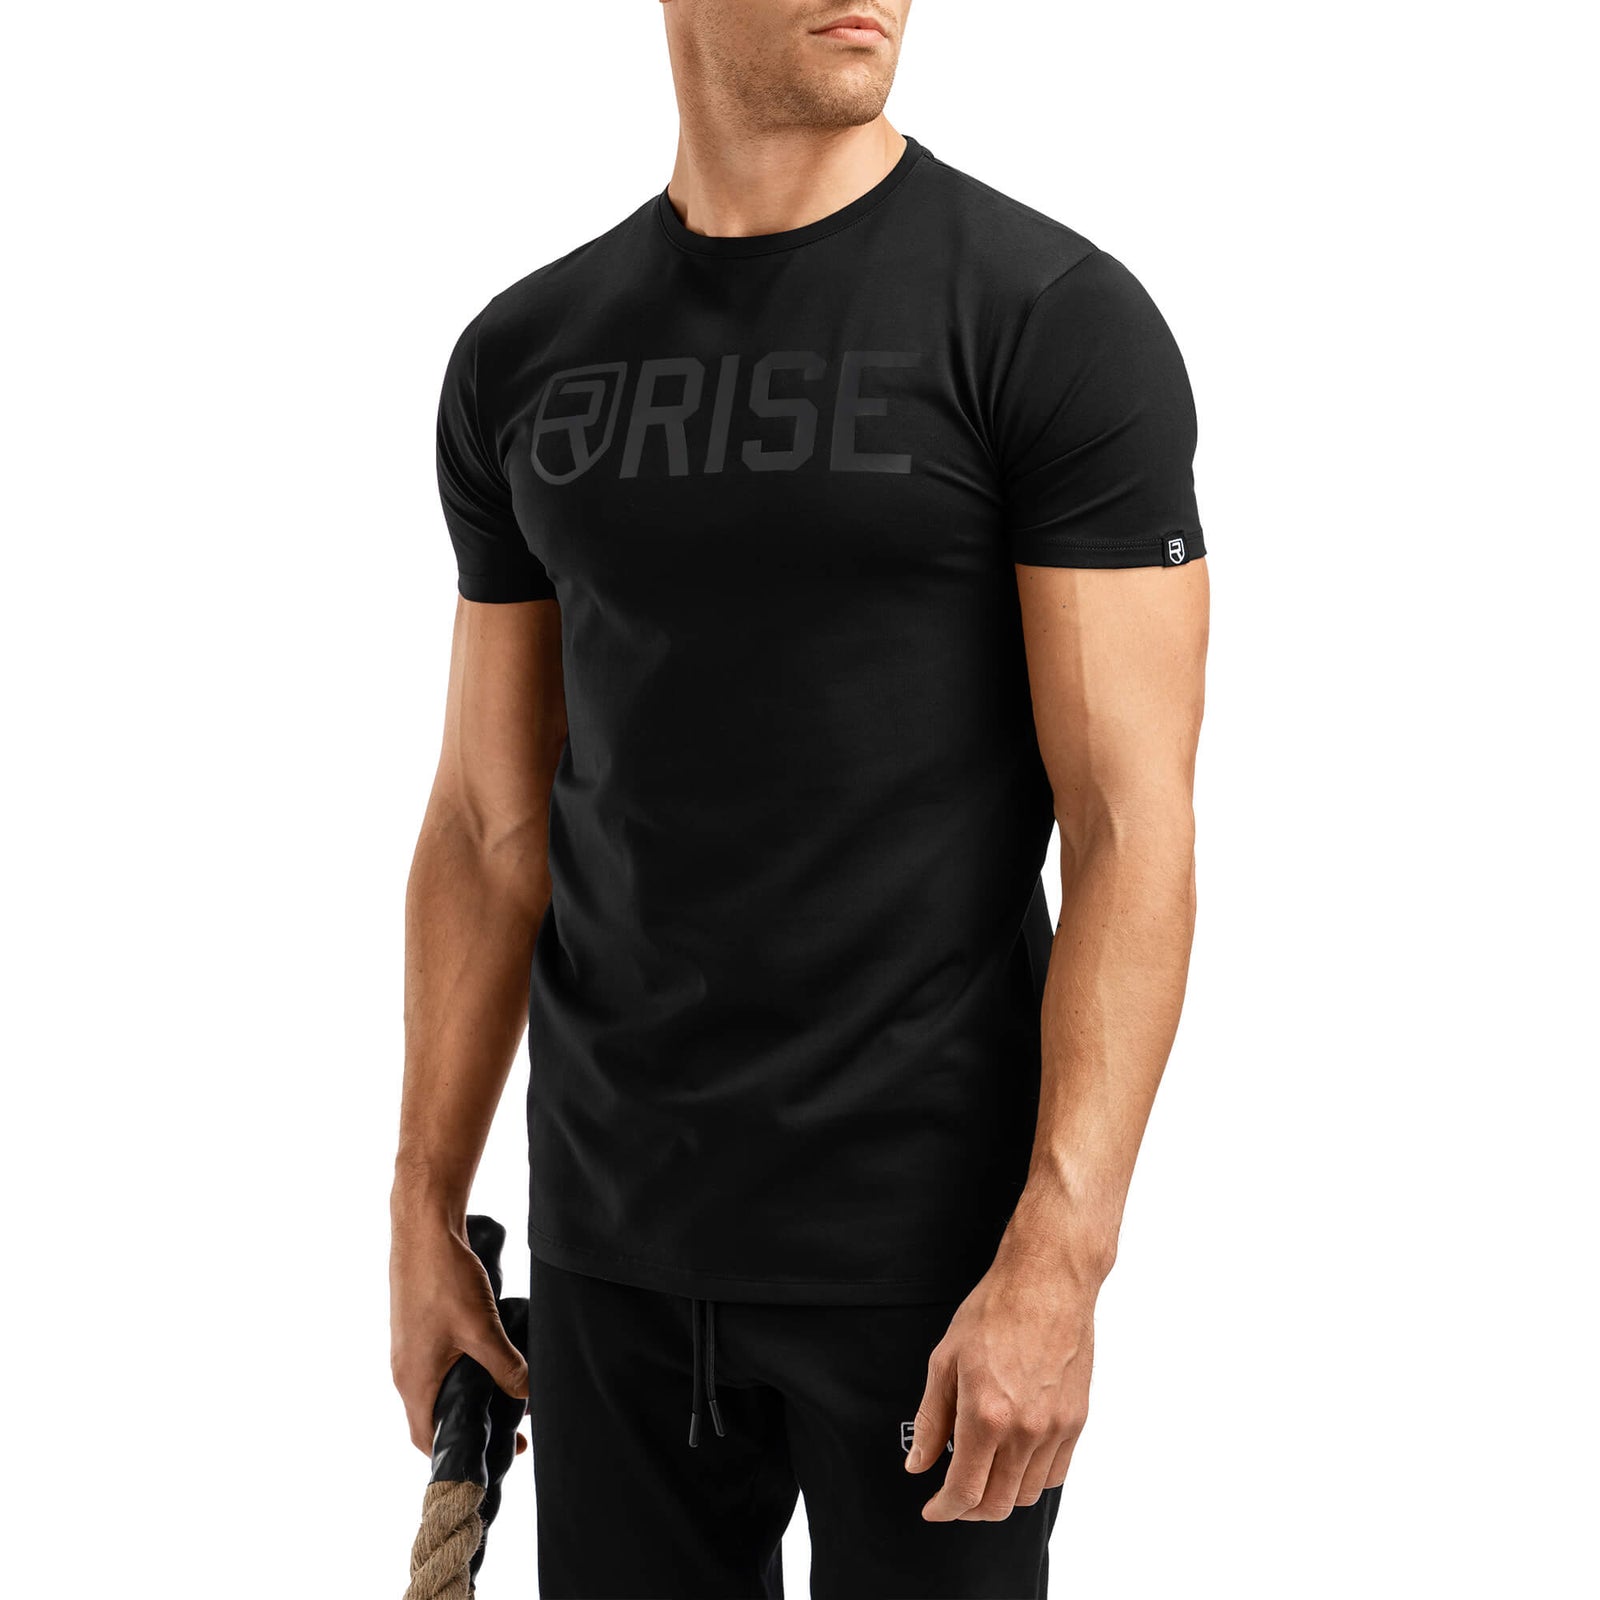 Signature Oversized T-Shirt - Black - Rise Canada